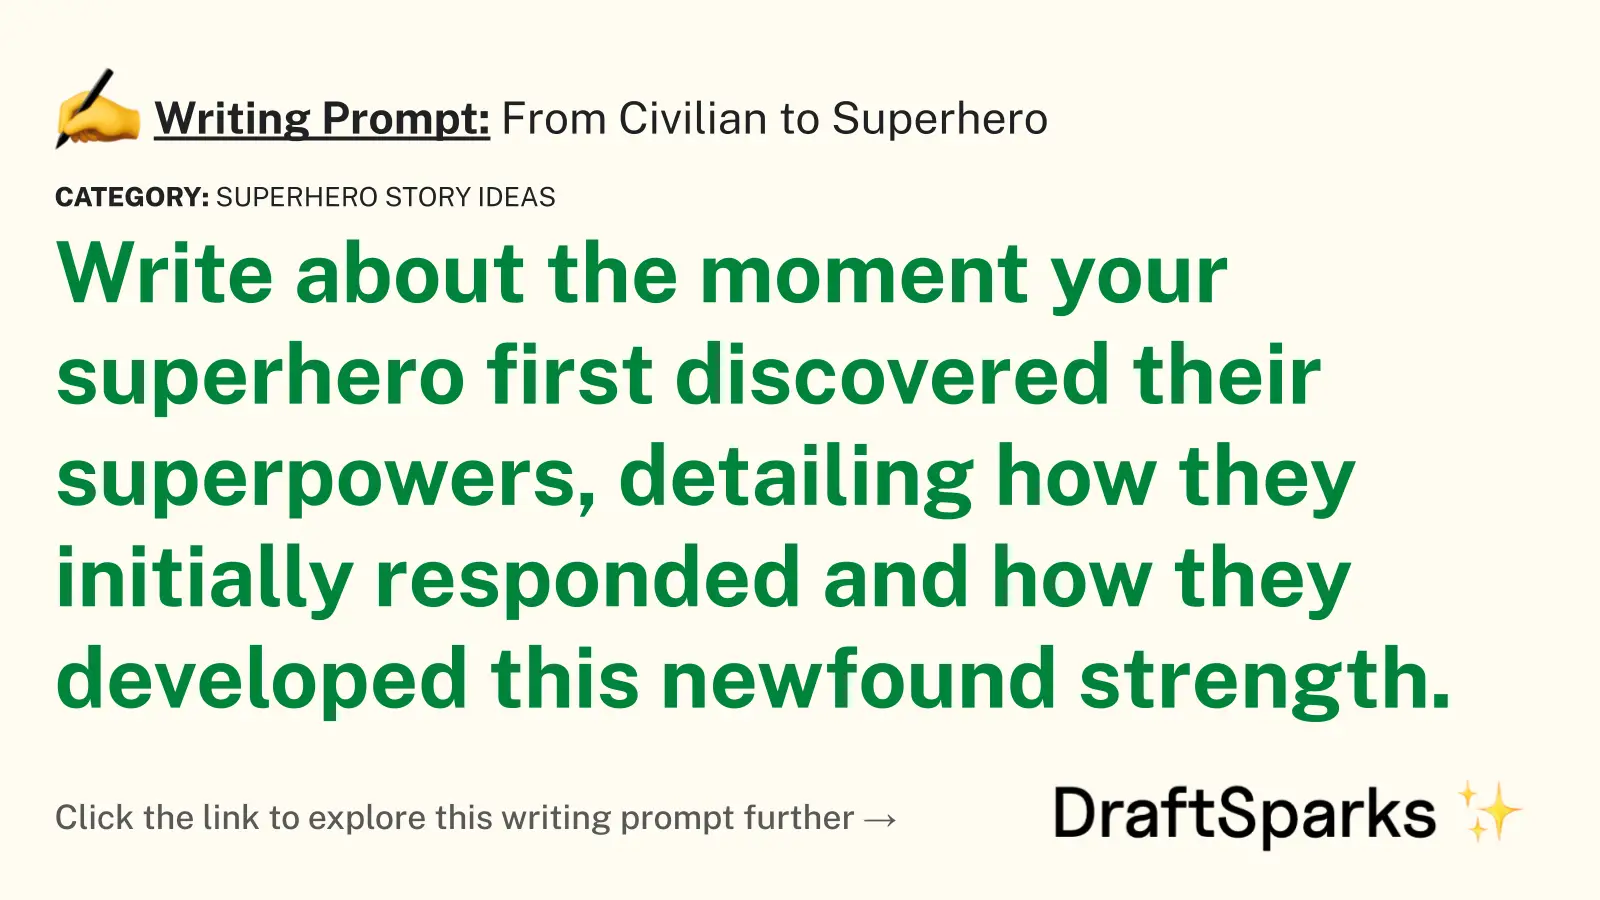 From Civilian to Superhero